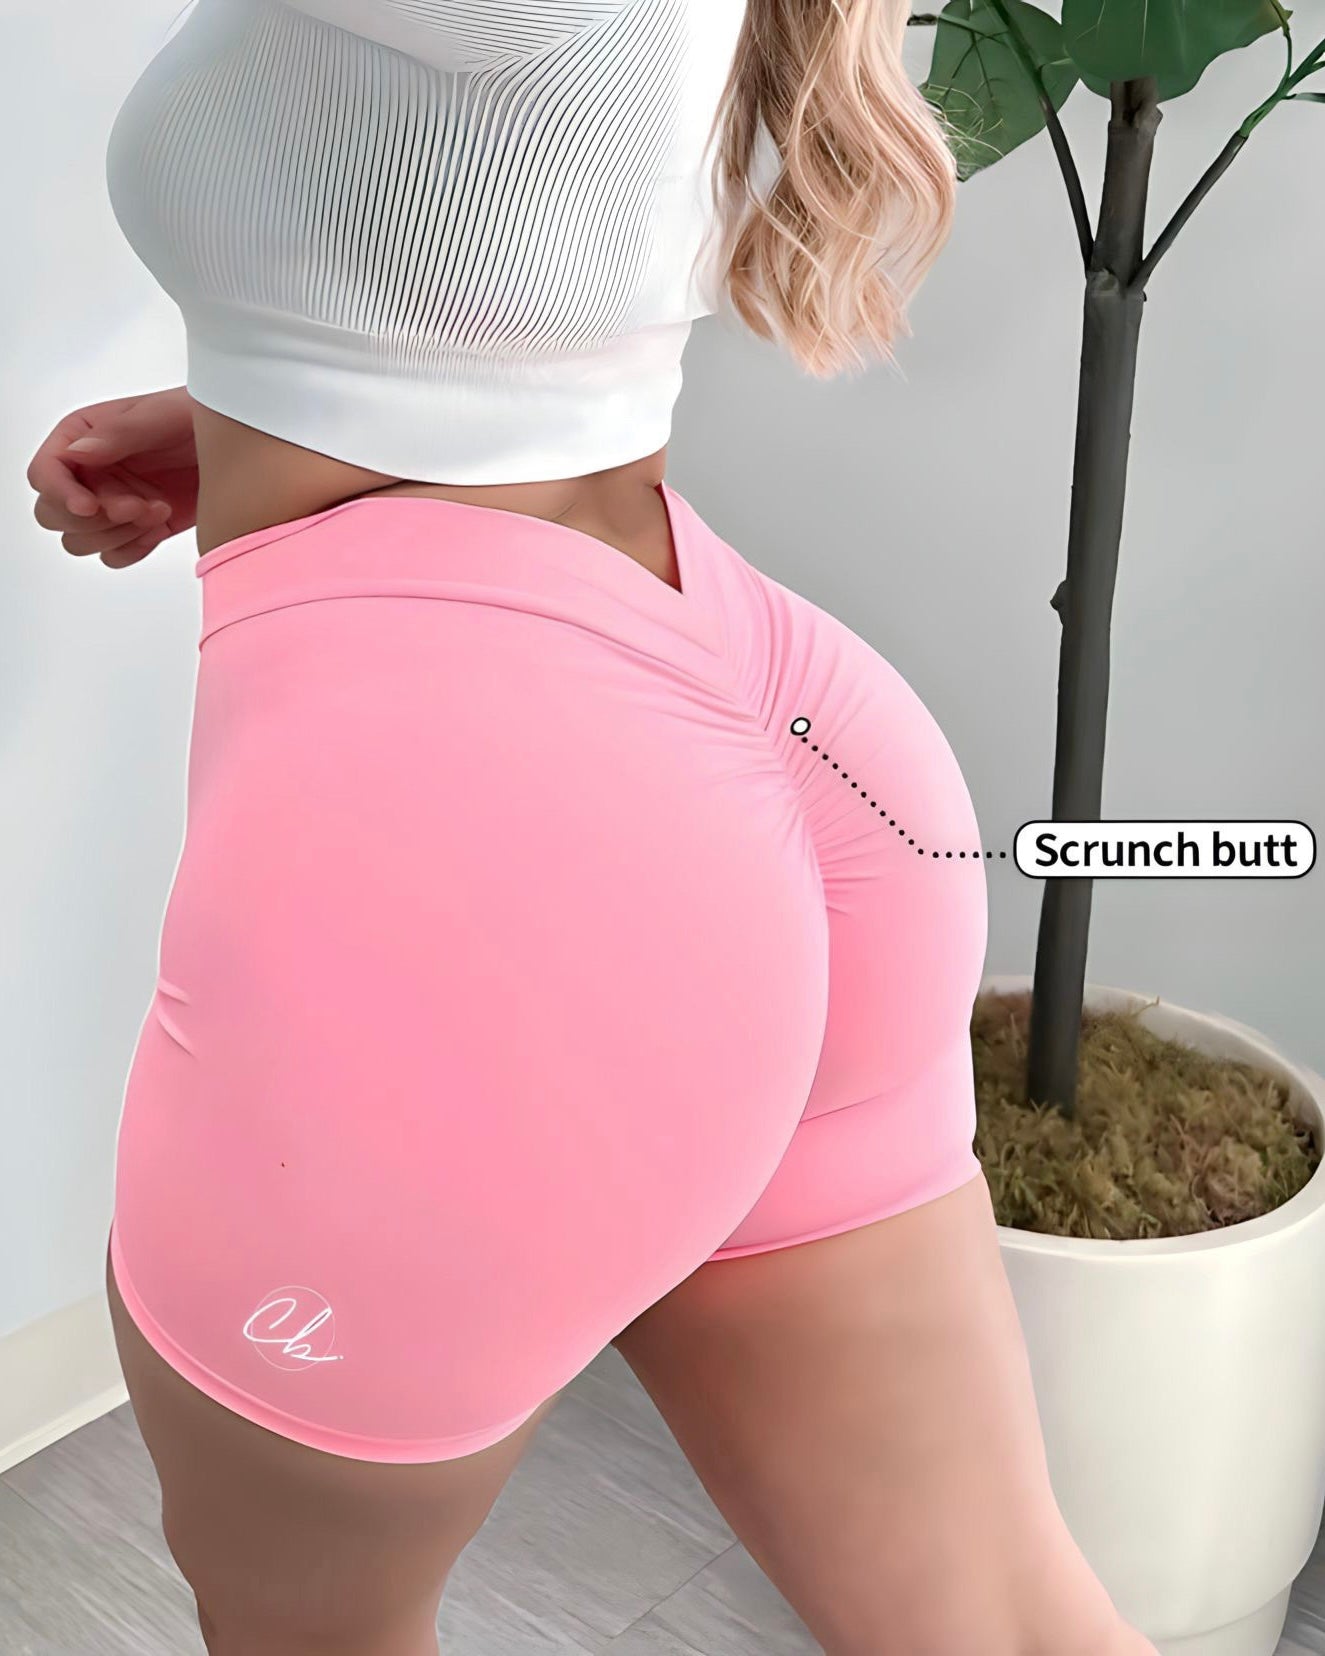 Go Time V-Back Scrunch Butt Shorts